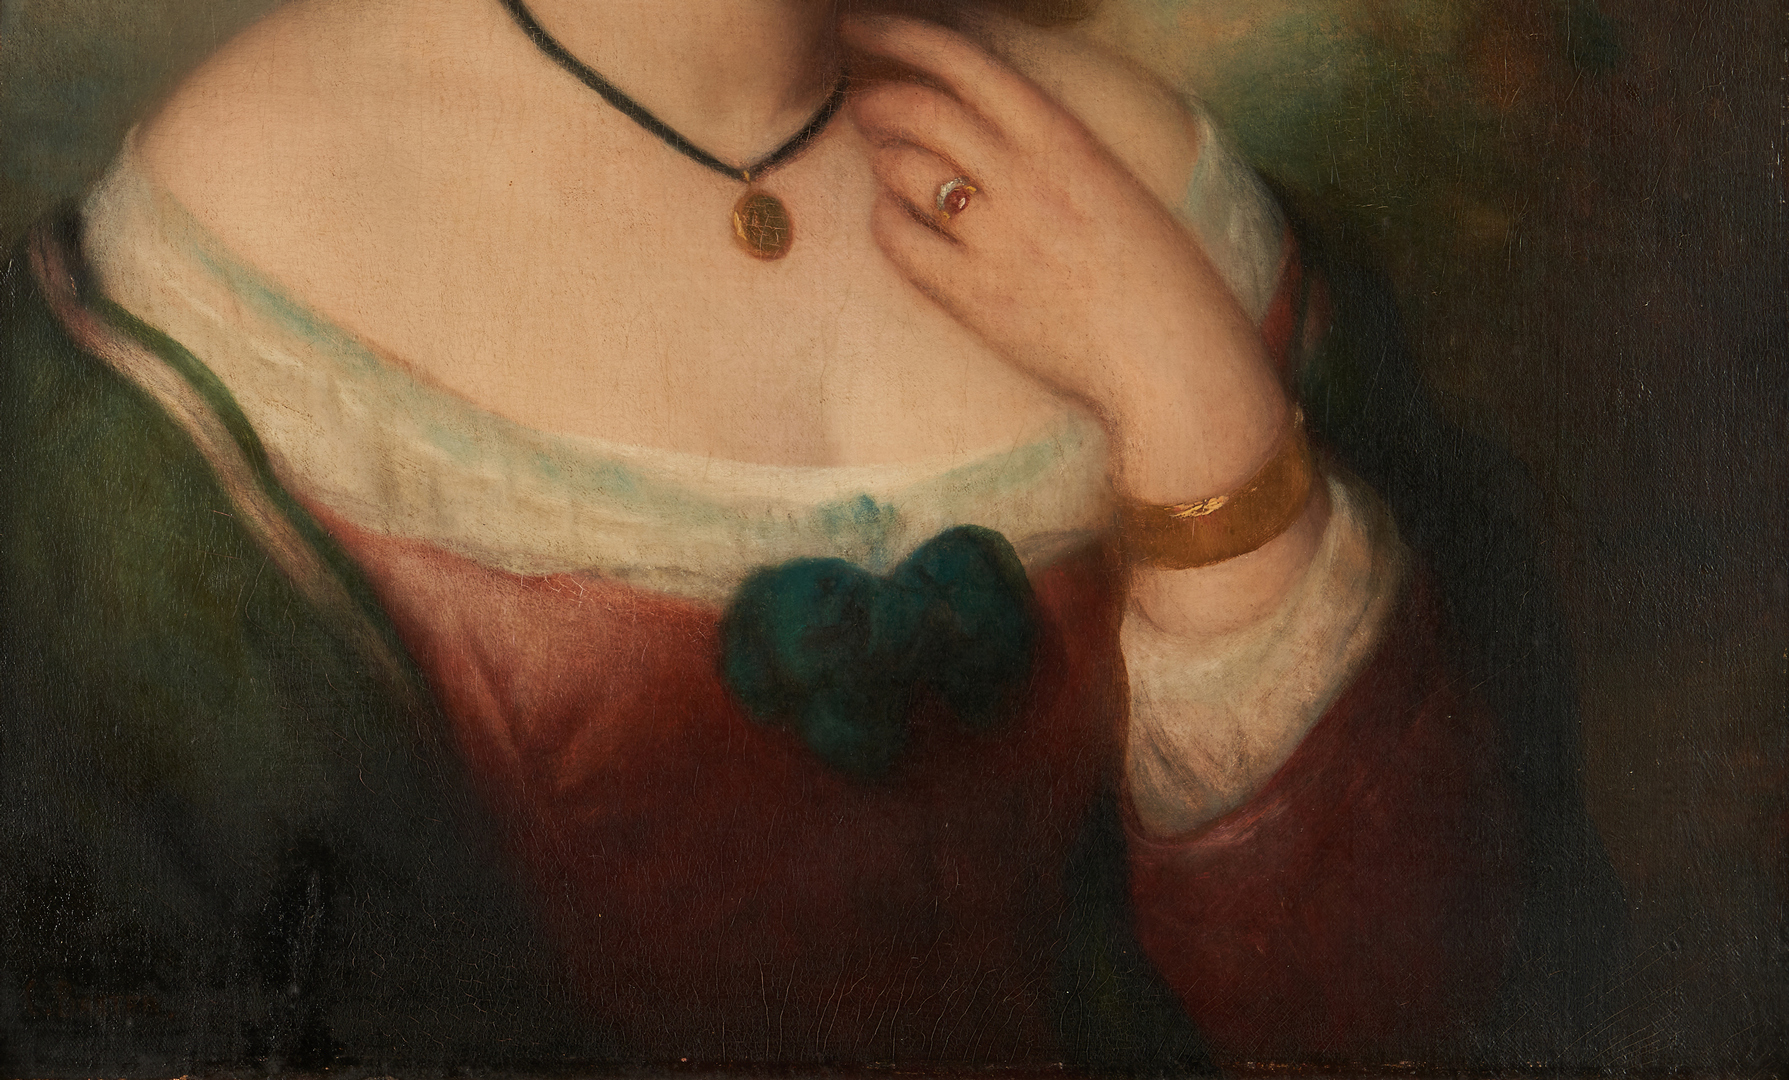 Lot 302: Portrait of a Lady, attrib. to Charles Baxter